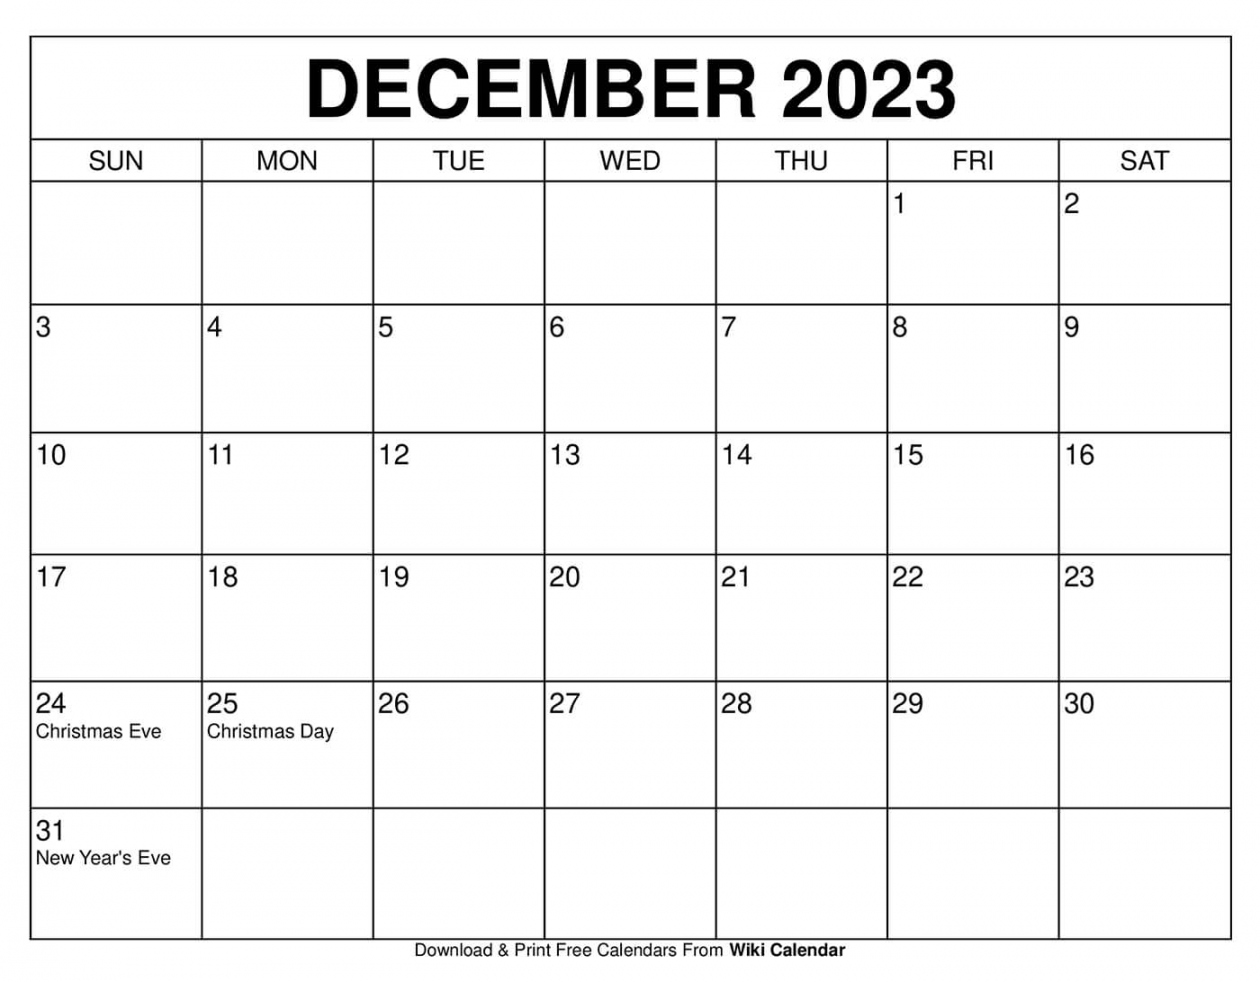 Free Printable December  Calendar Templates With Holidays  - FREE Printables - Free Printable December Calendar